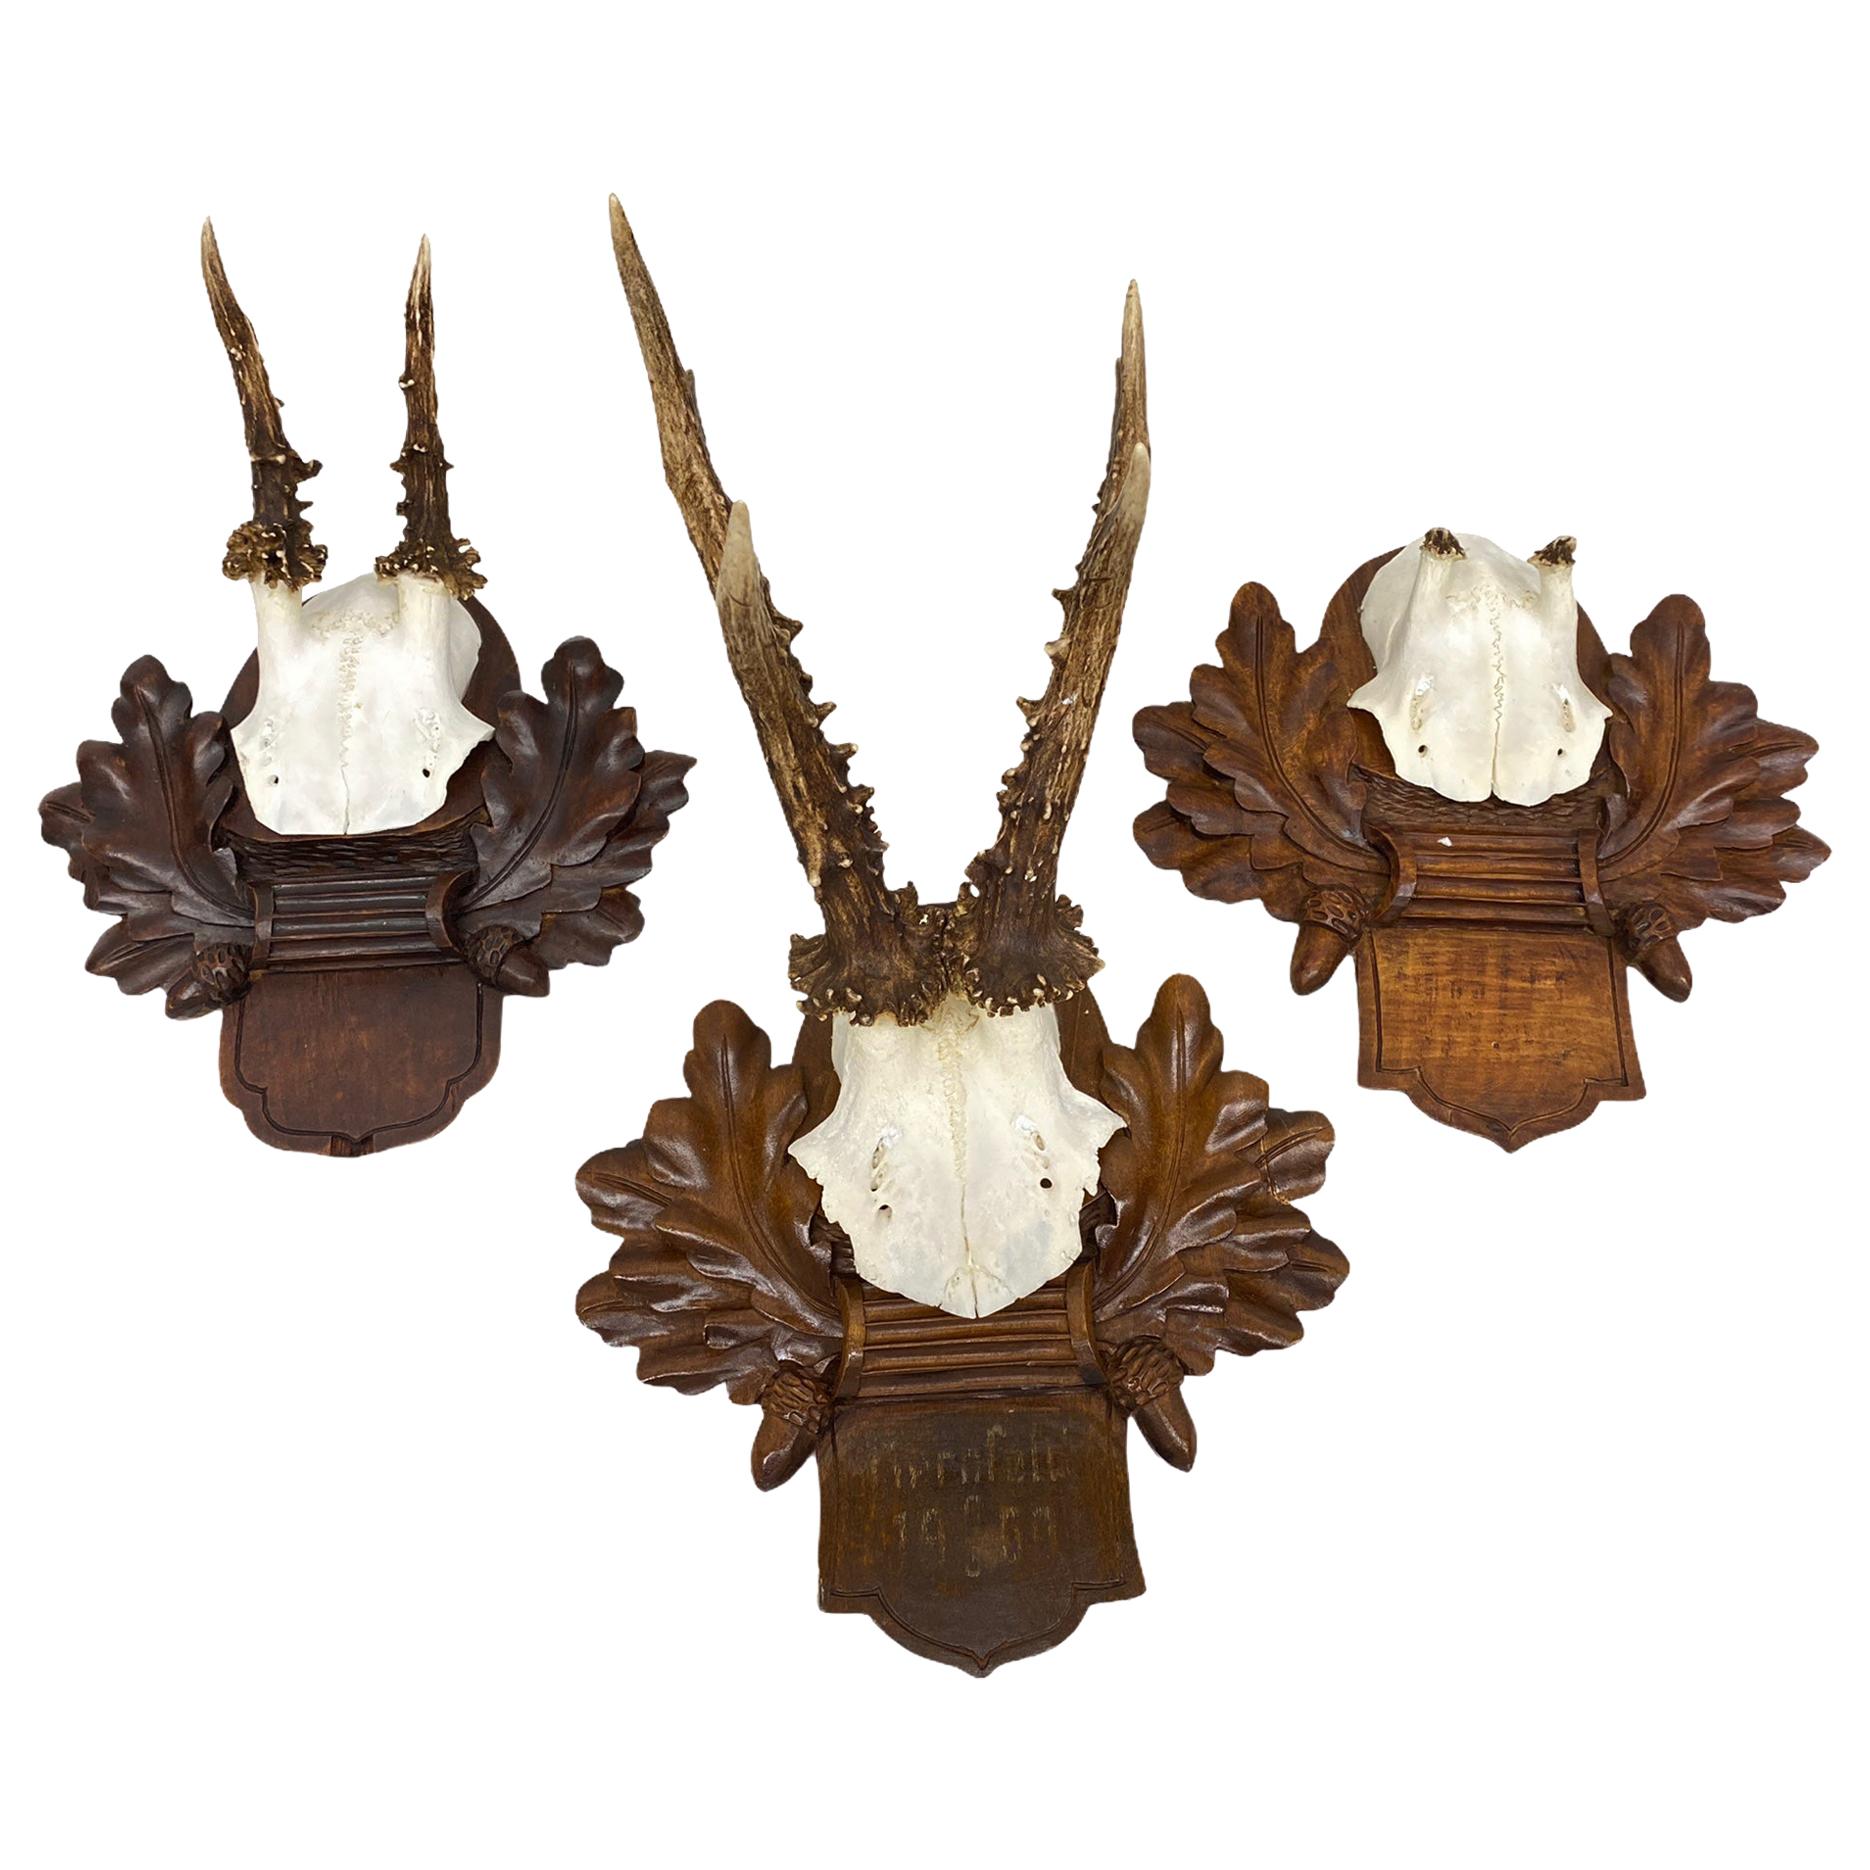 Three Deer Antler Mount Trophy on Black Forest Carved Wood Plaque from Austria